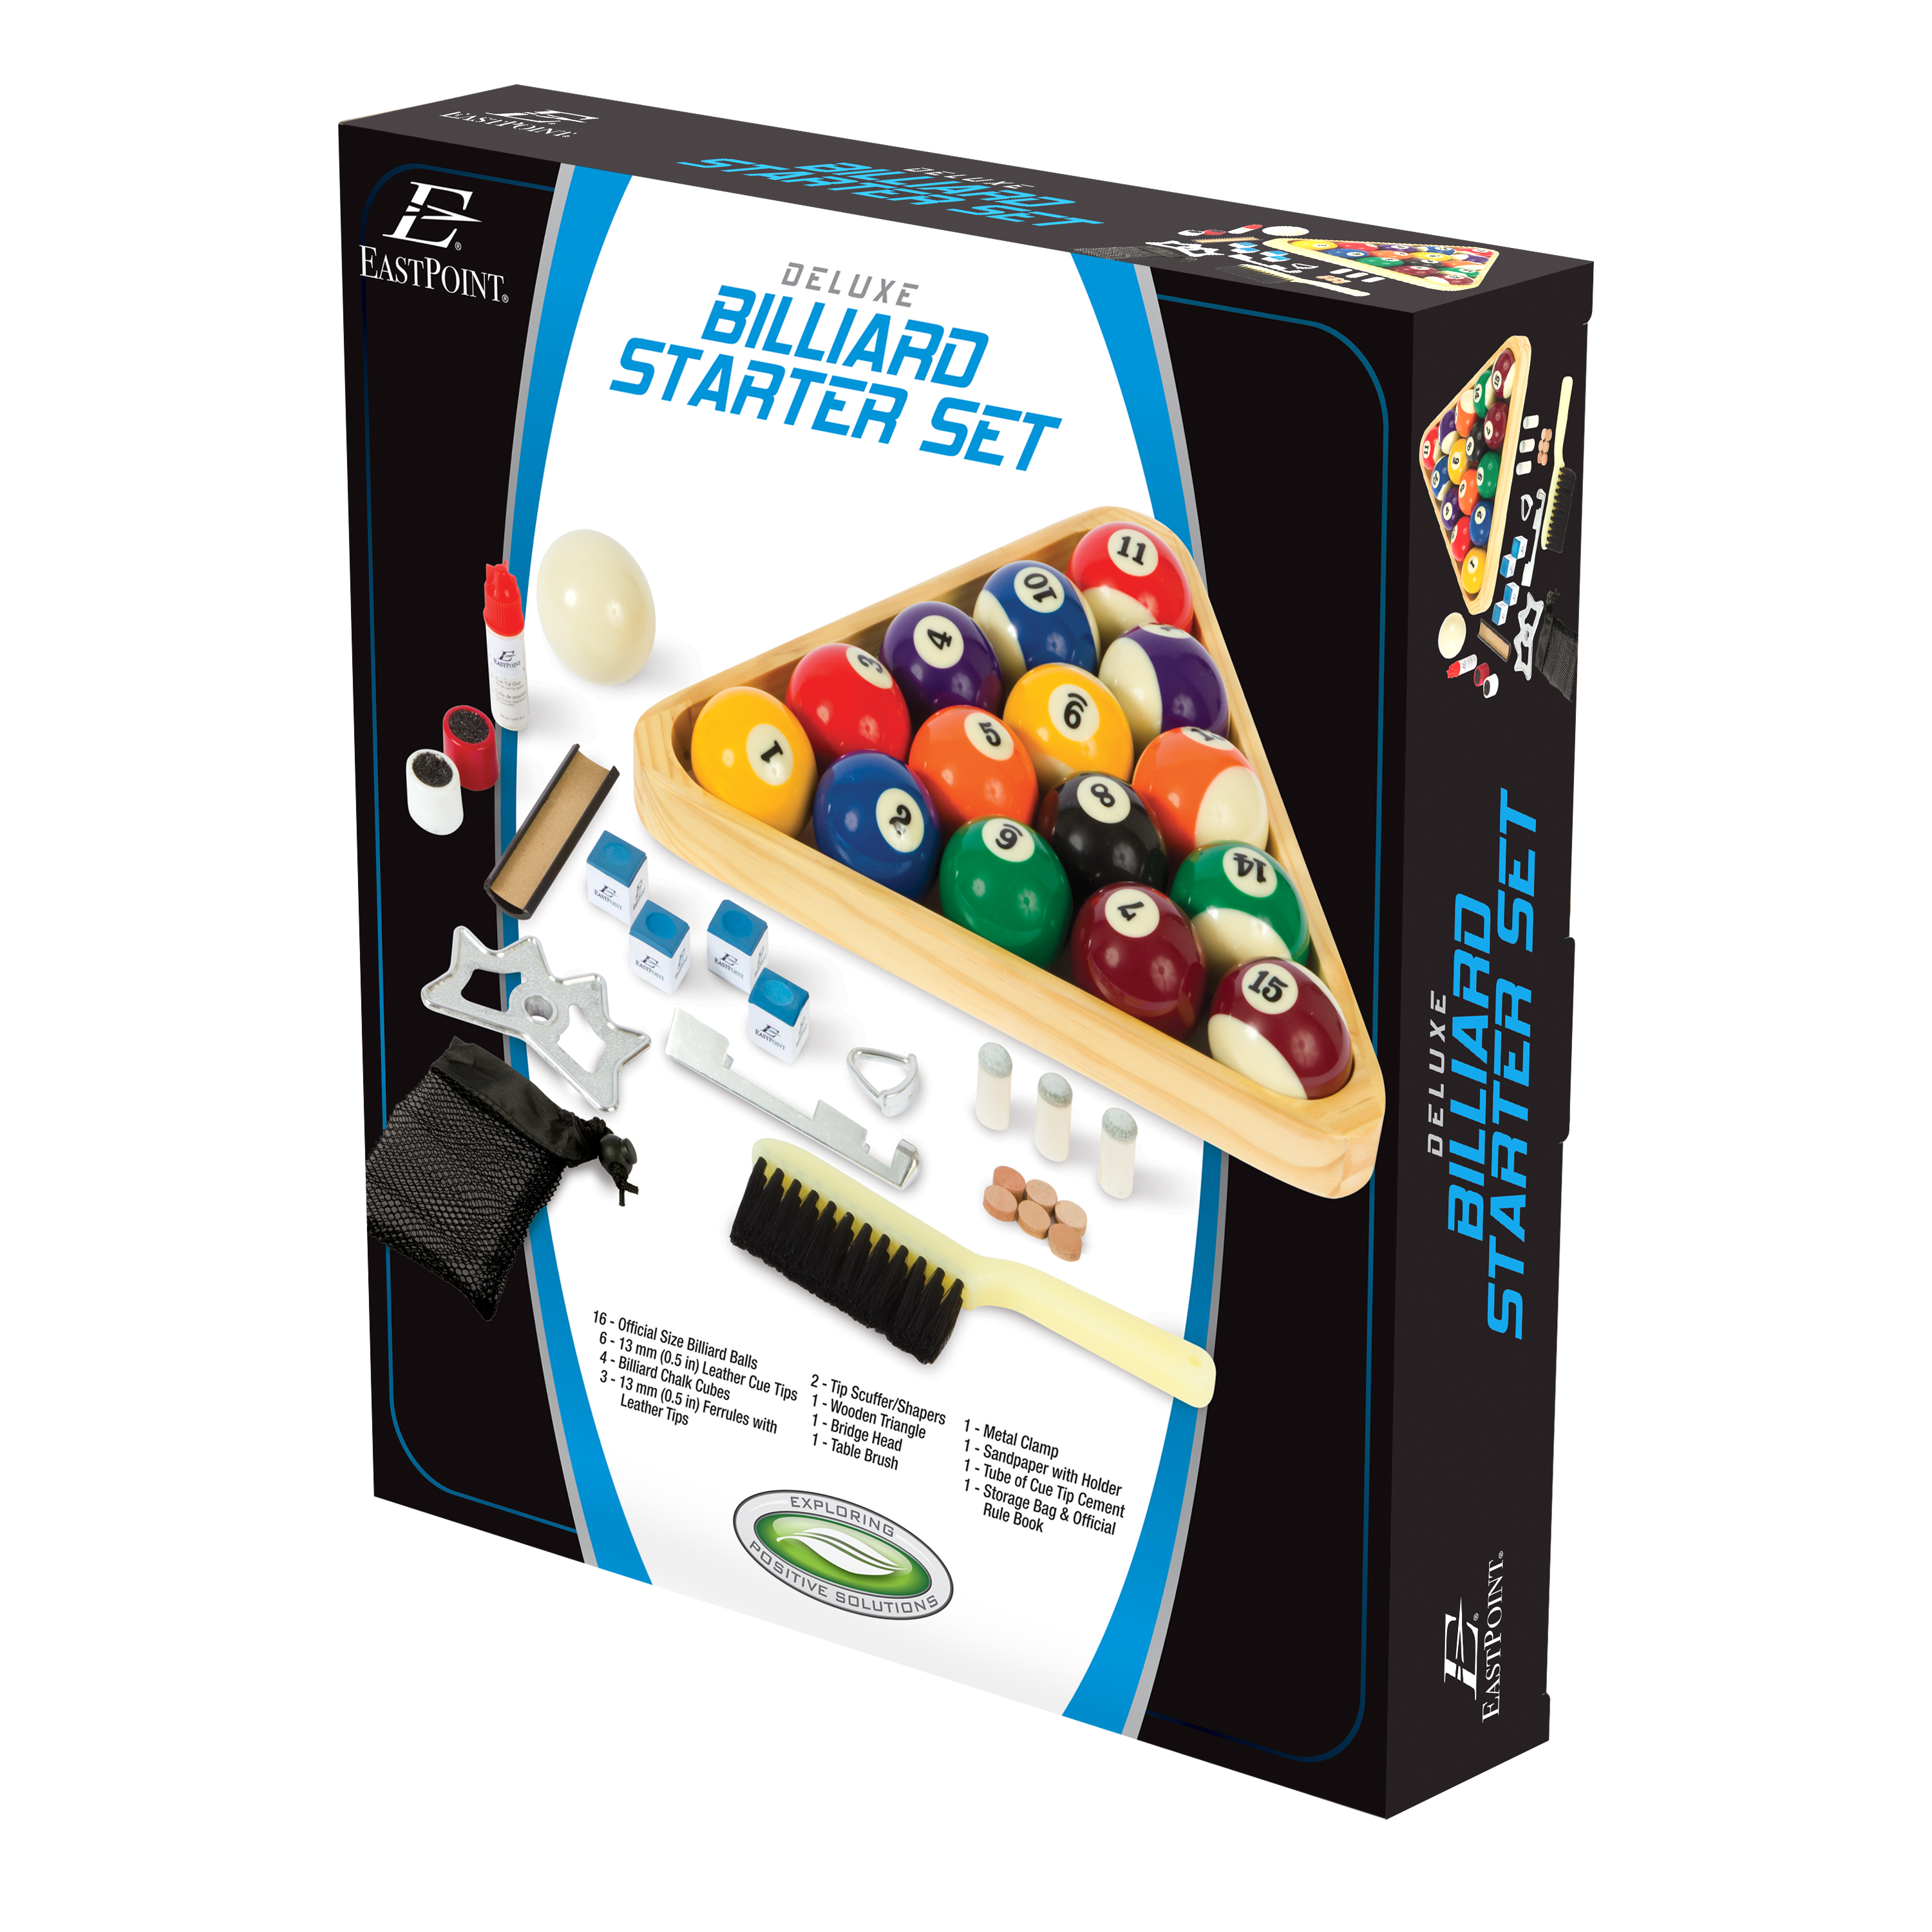 EastPoint Sports Deluxe Billiard Table Starter Kit - image 2 of 2